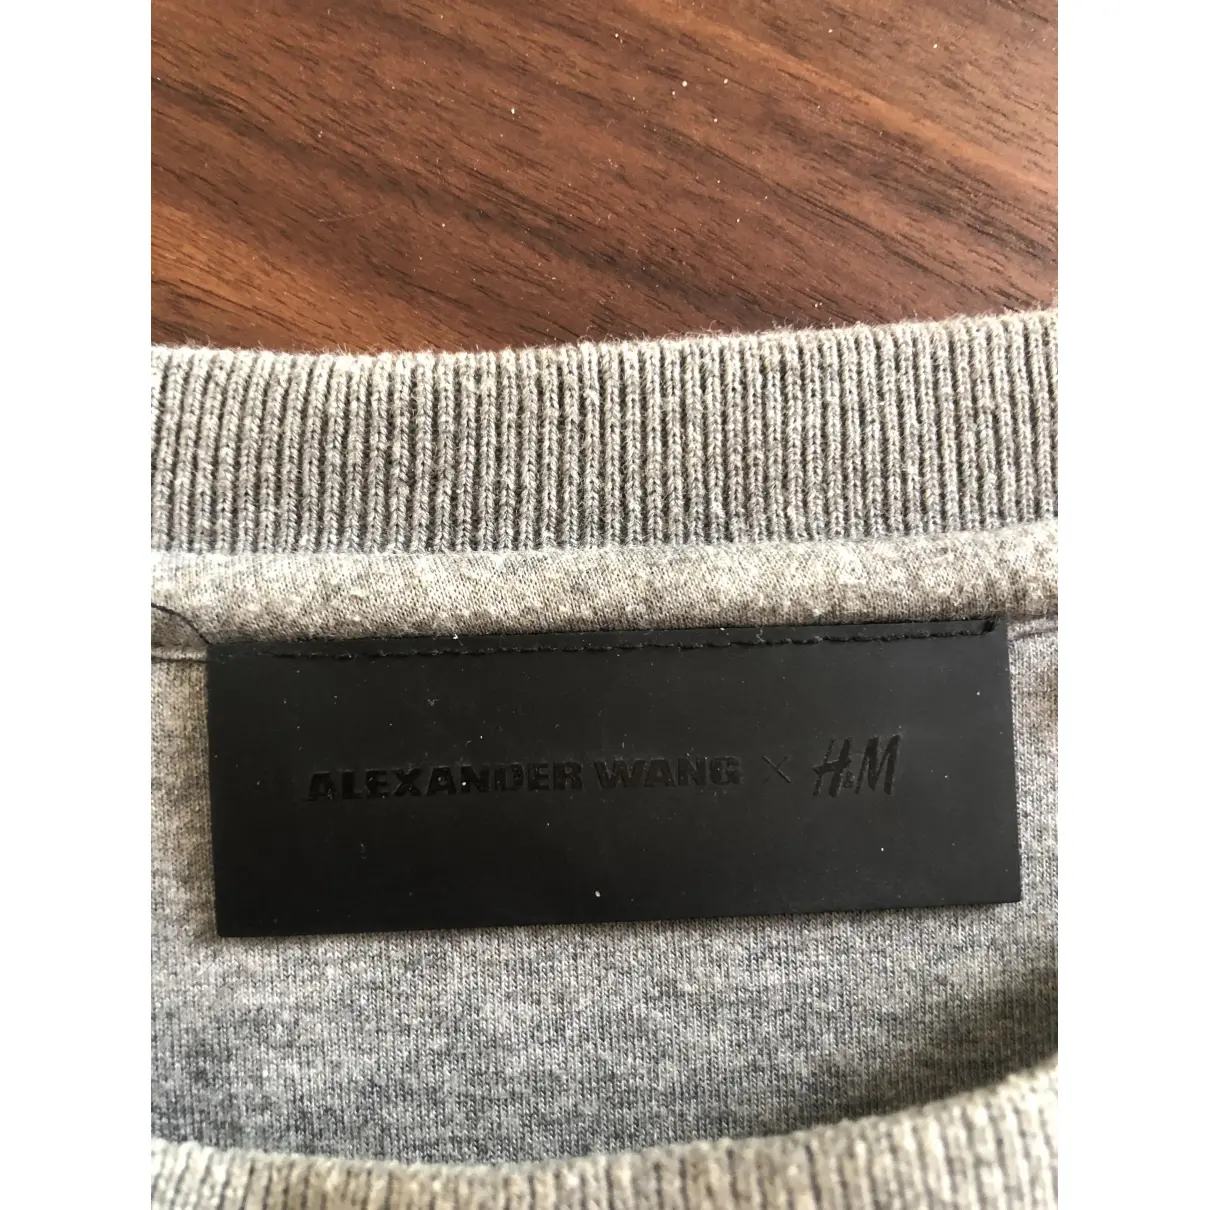 Sweatshirt Alexander Wang Pour H&M